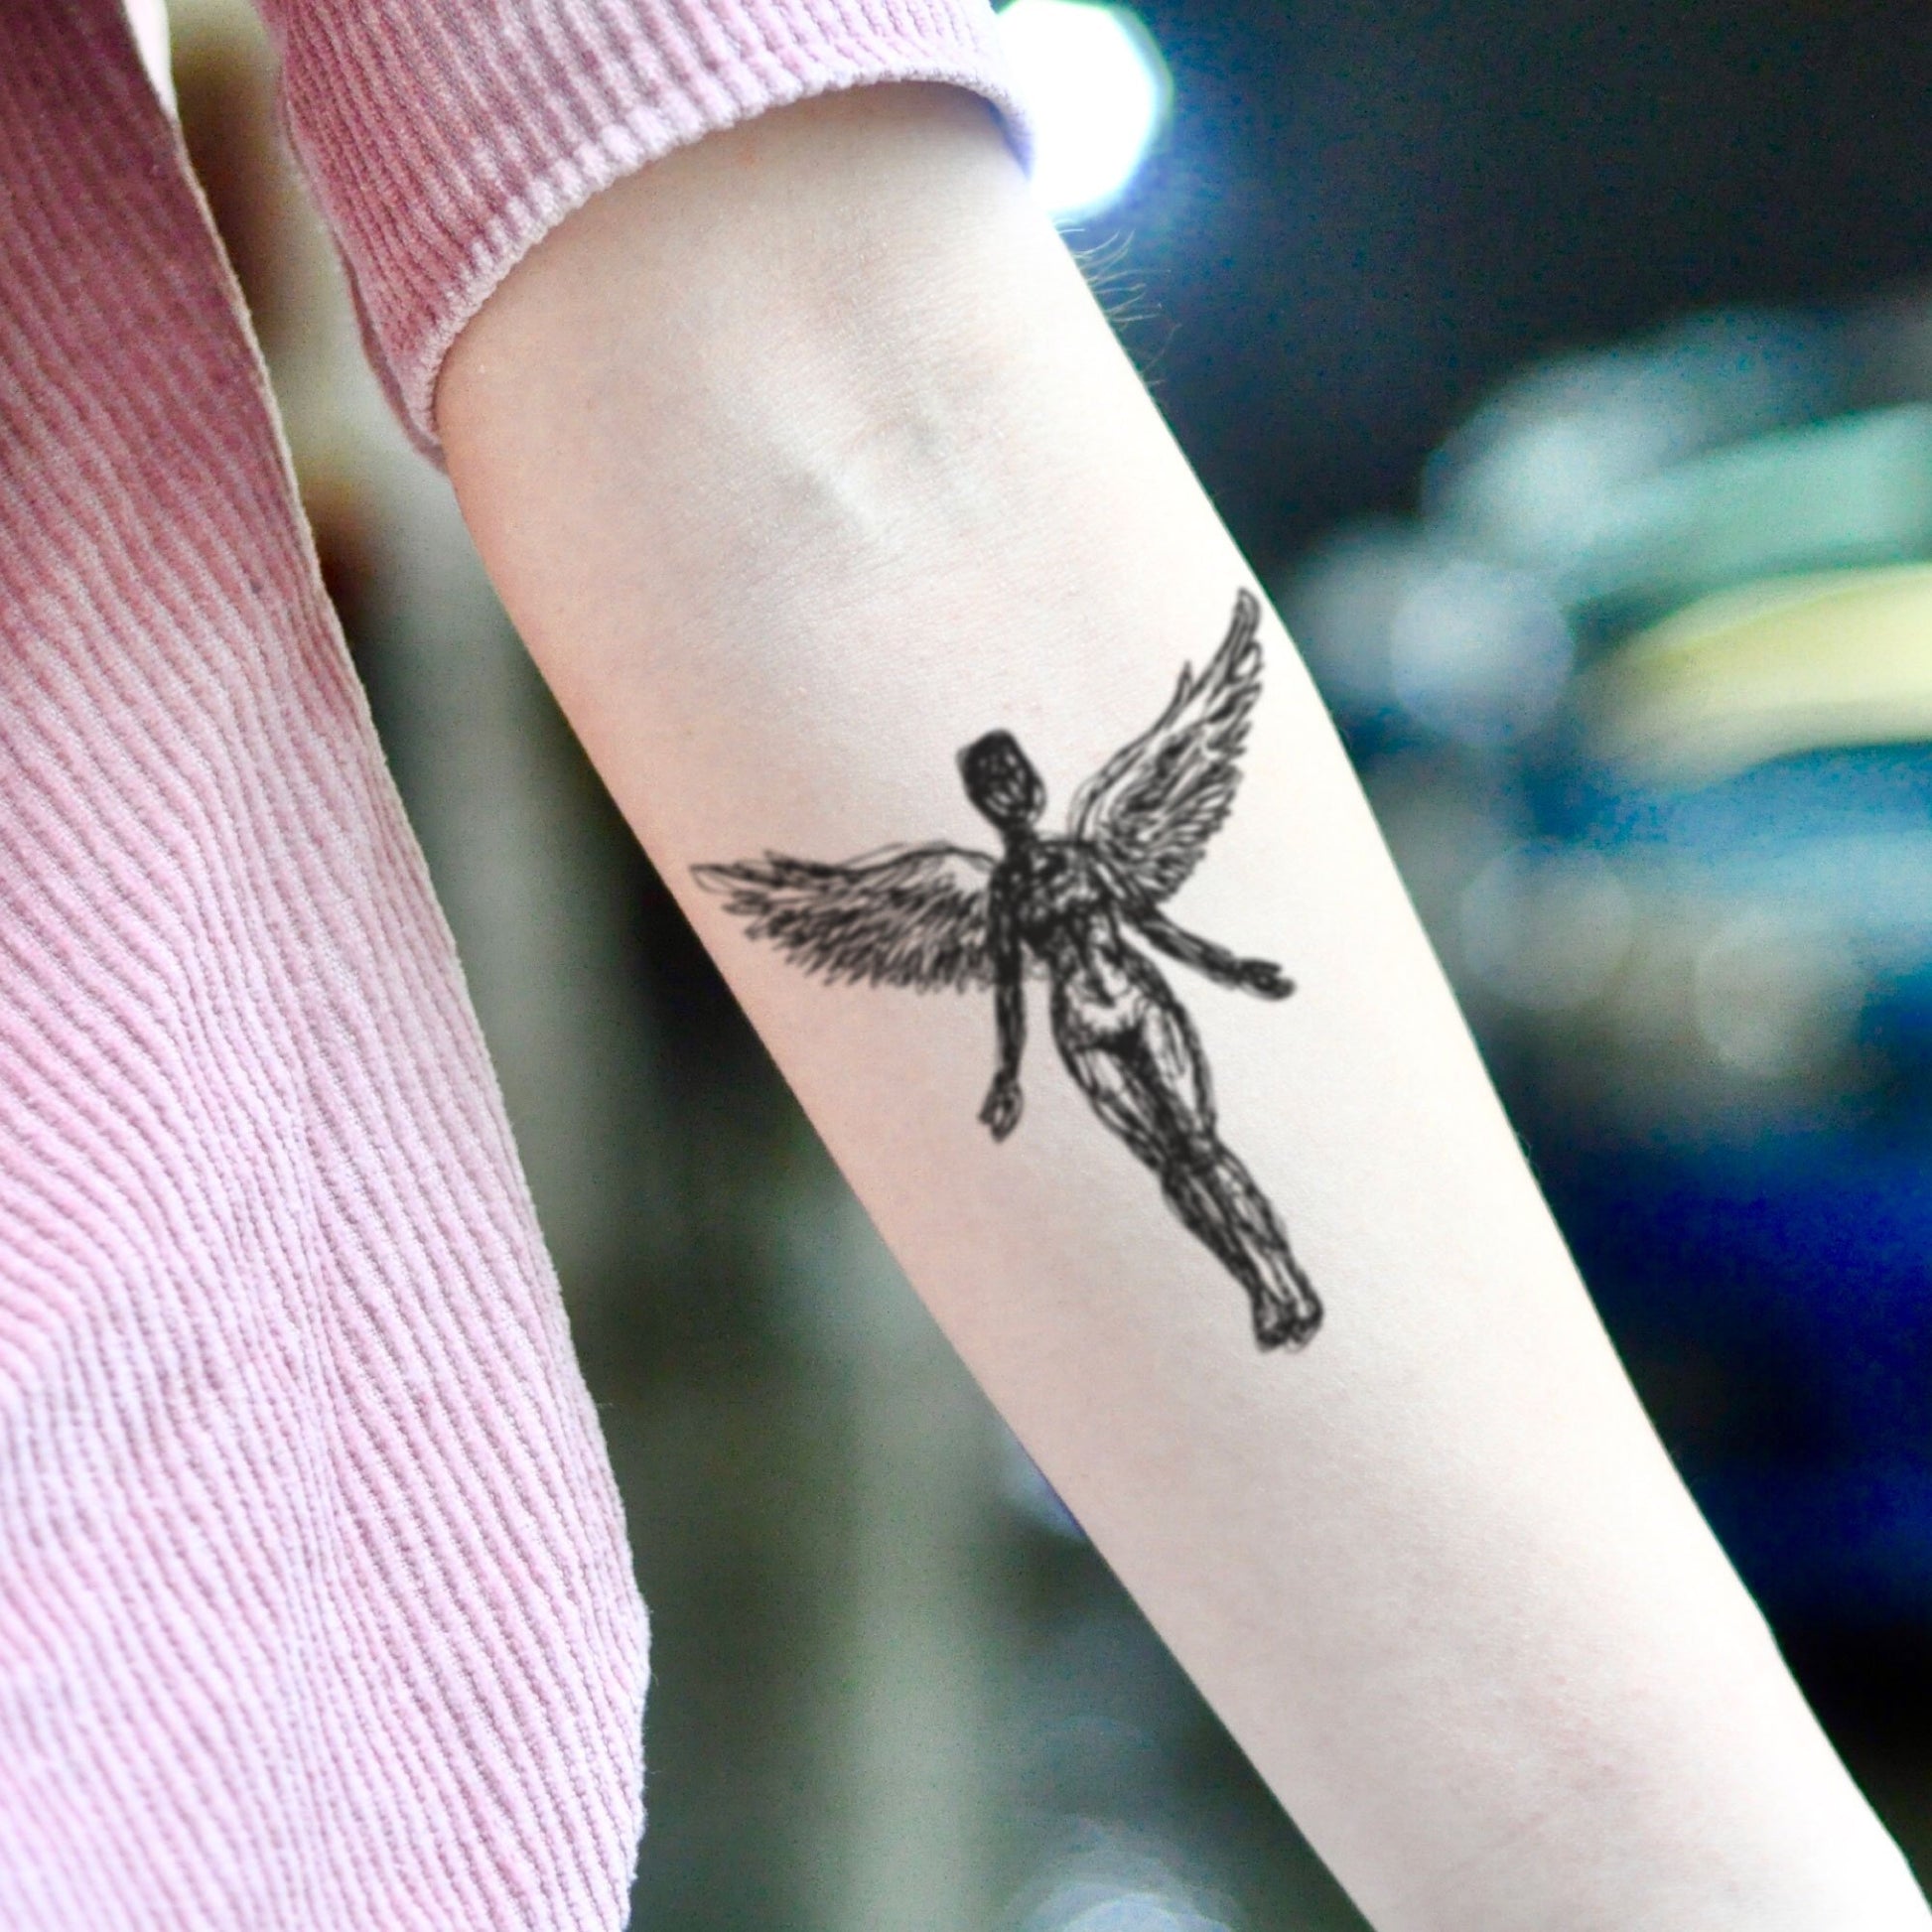 fake small in utero nirvana illustrative temporary tattoo sticker design idea on inner arm